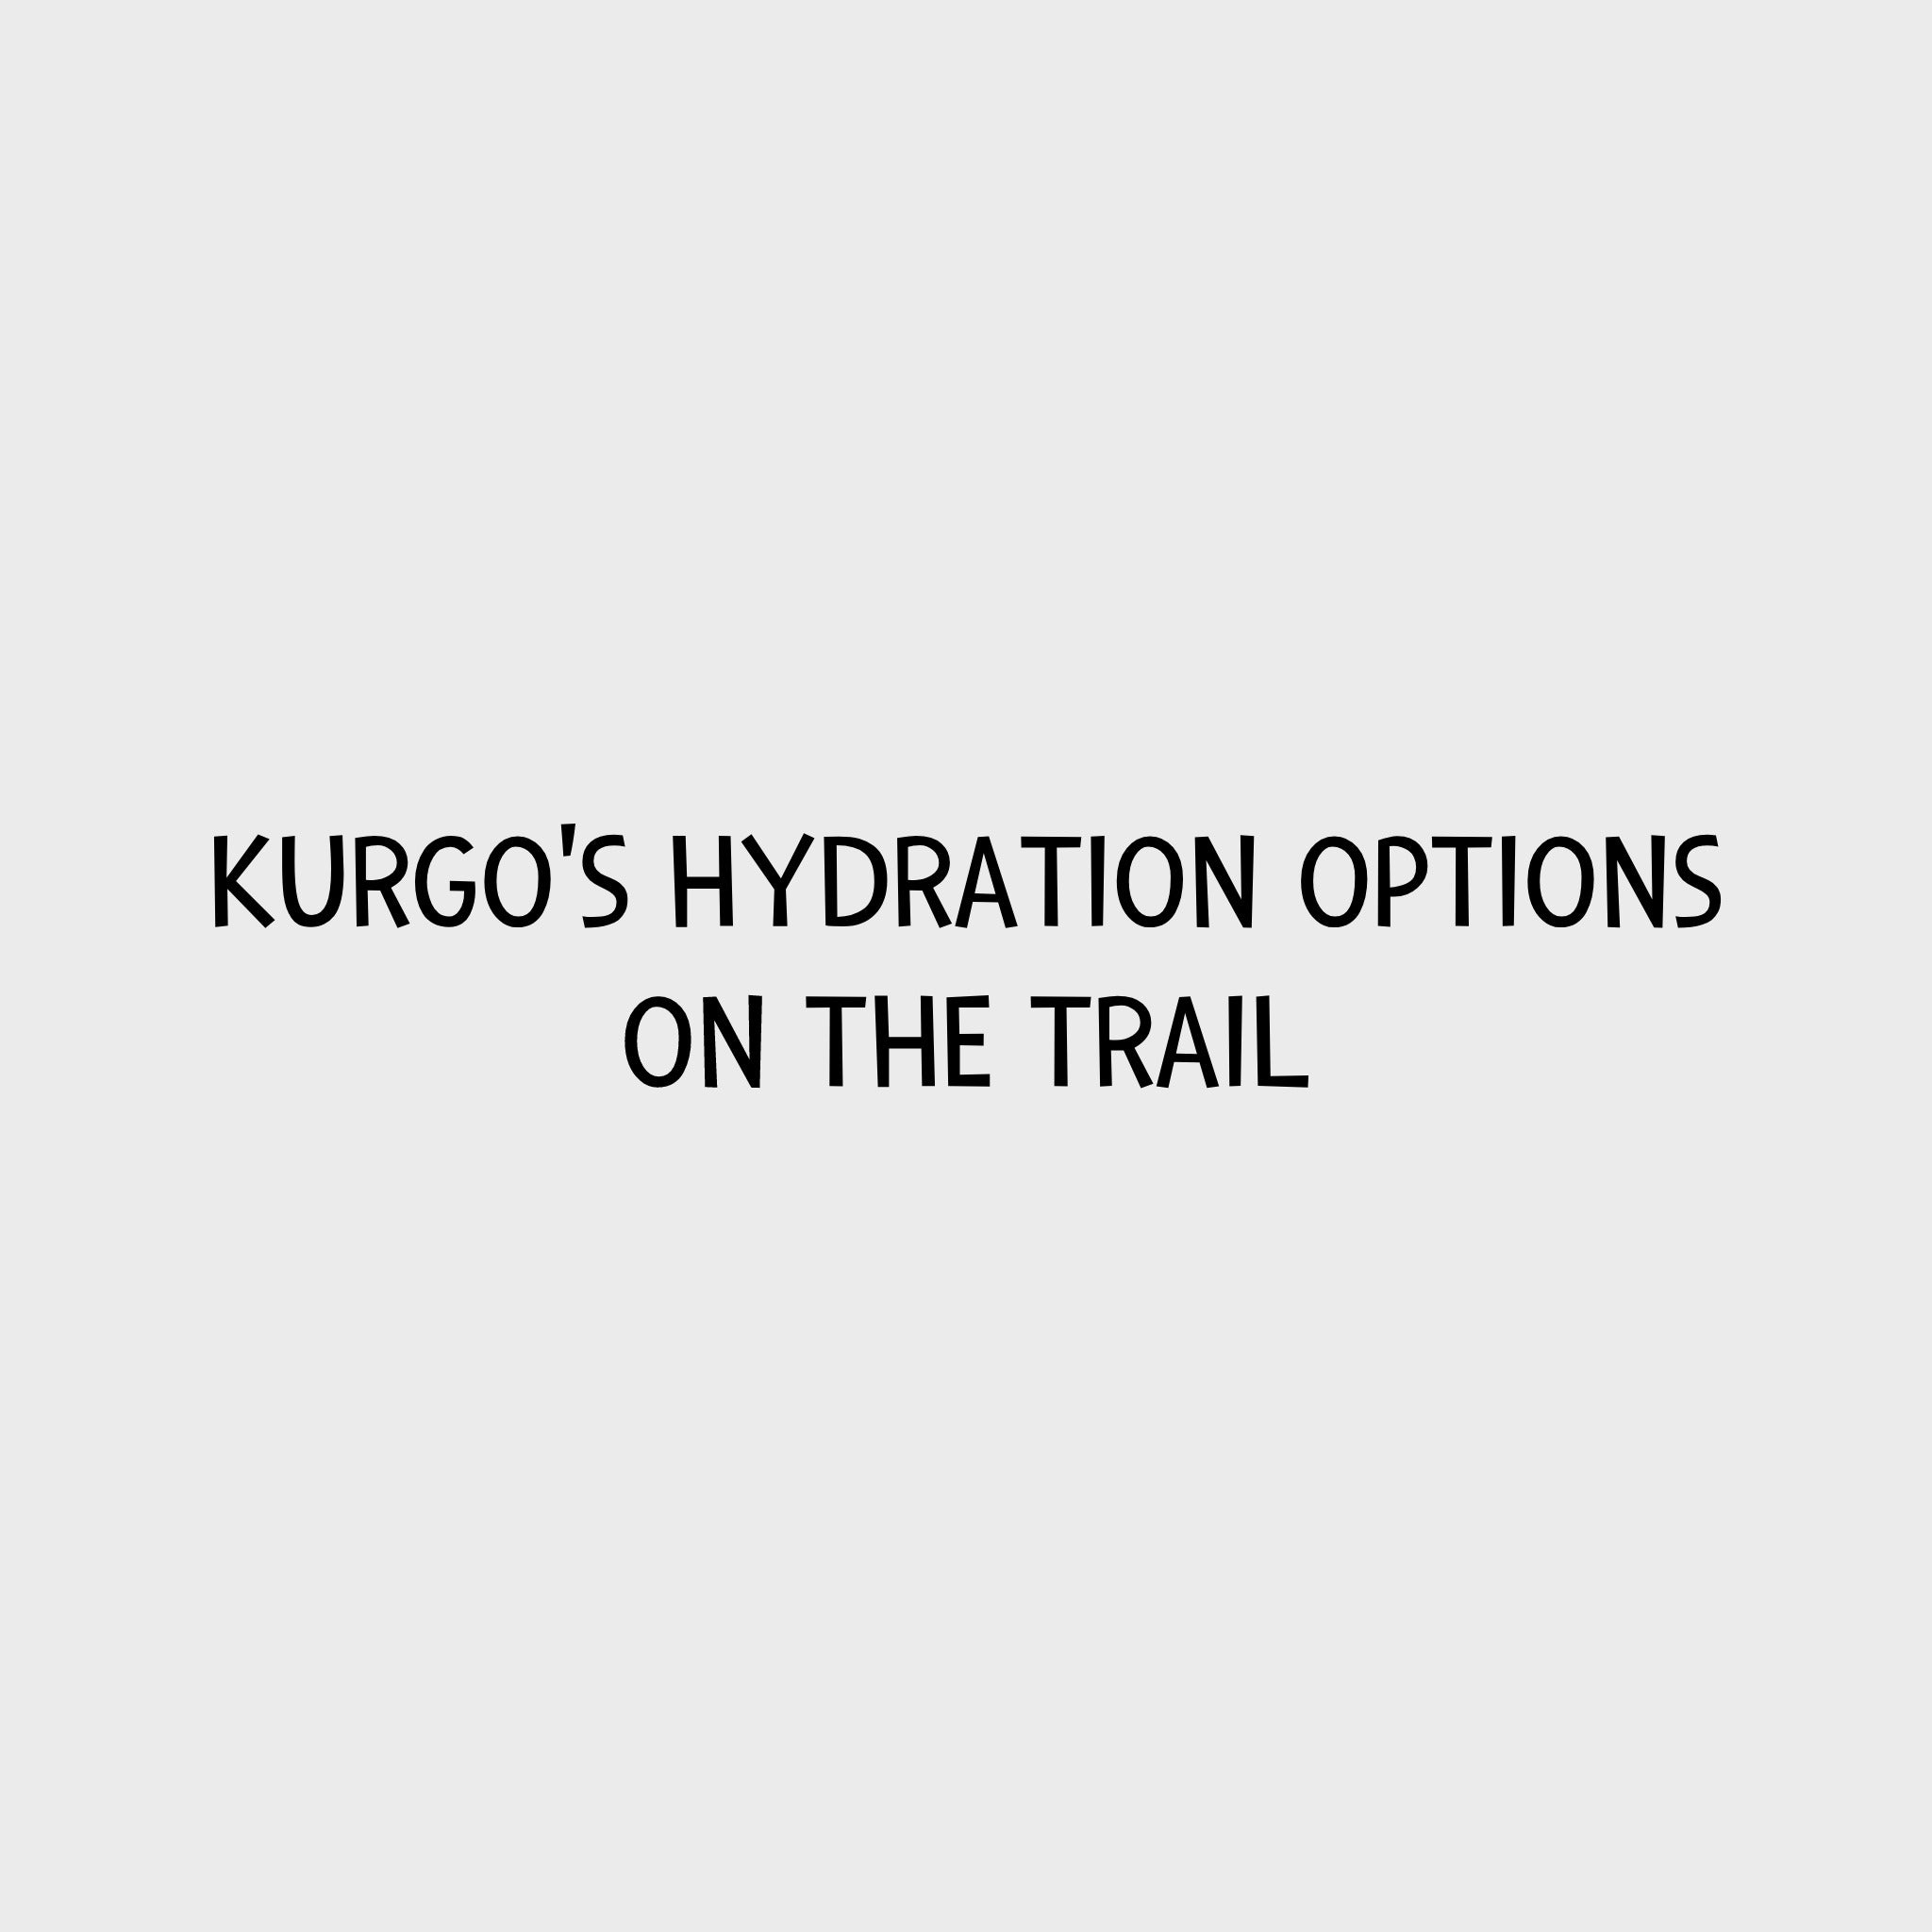 Video - Kurgo hydration options on the trail